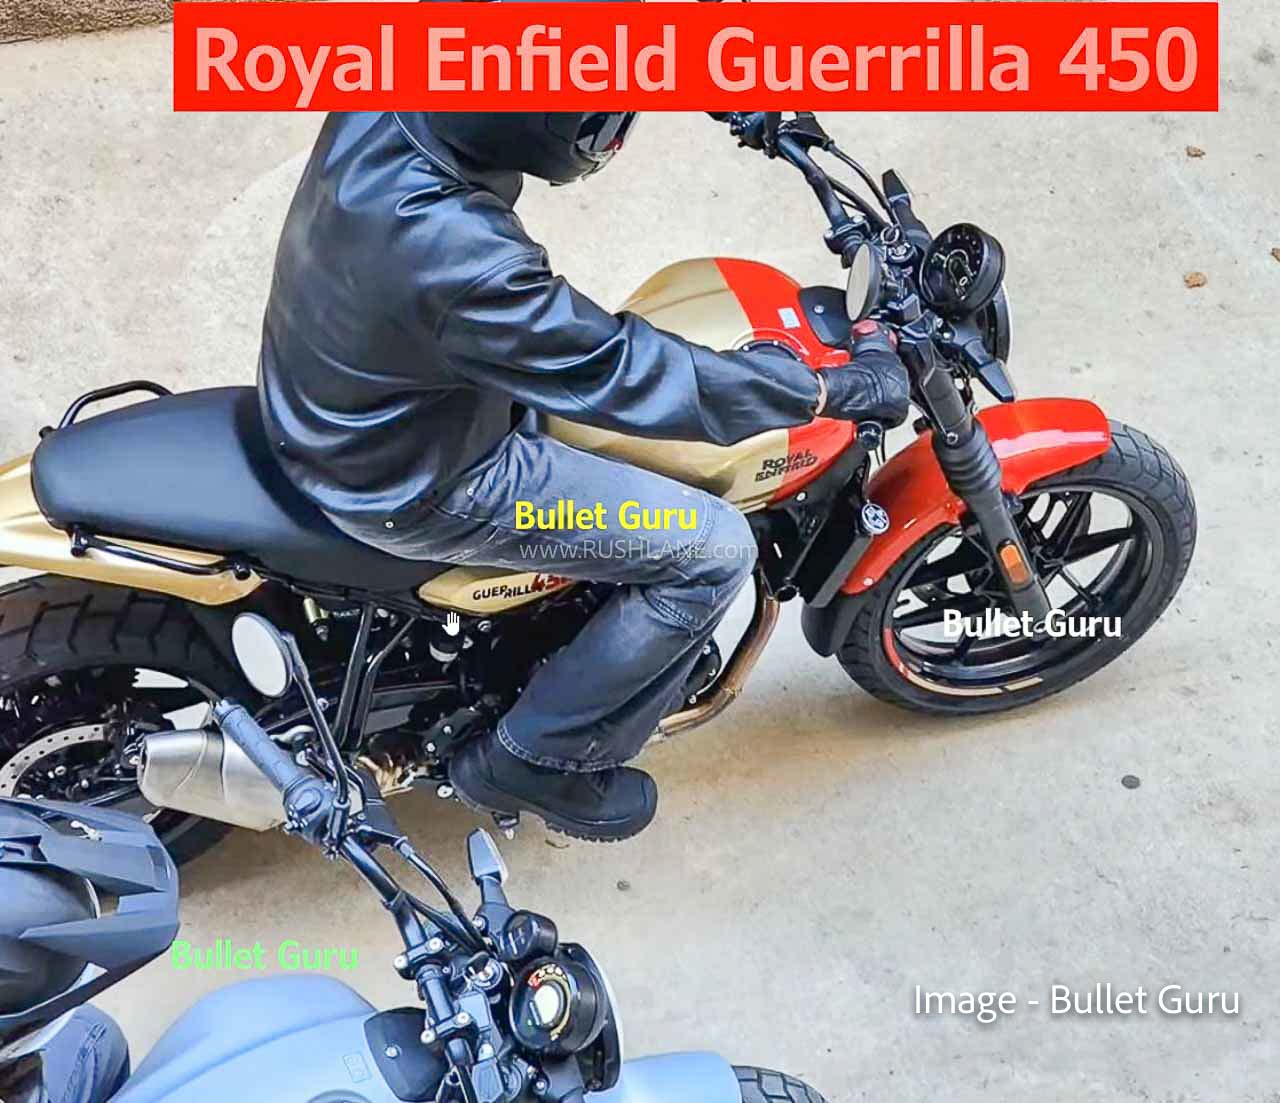 Royal Enfield Guerrilla 450 Colour Schemes